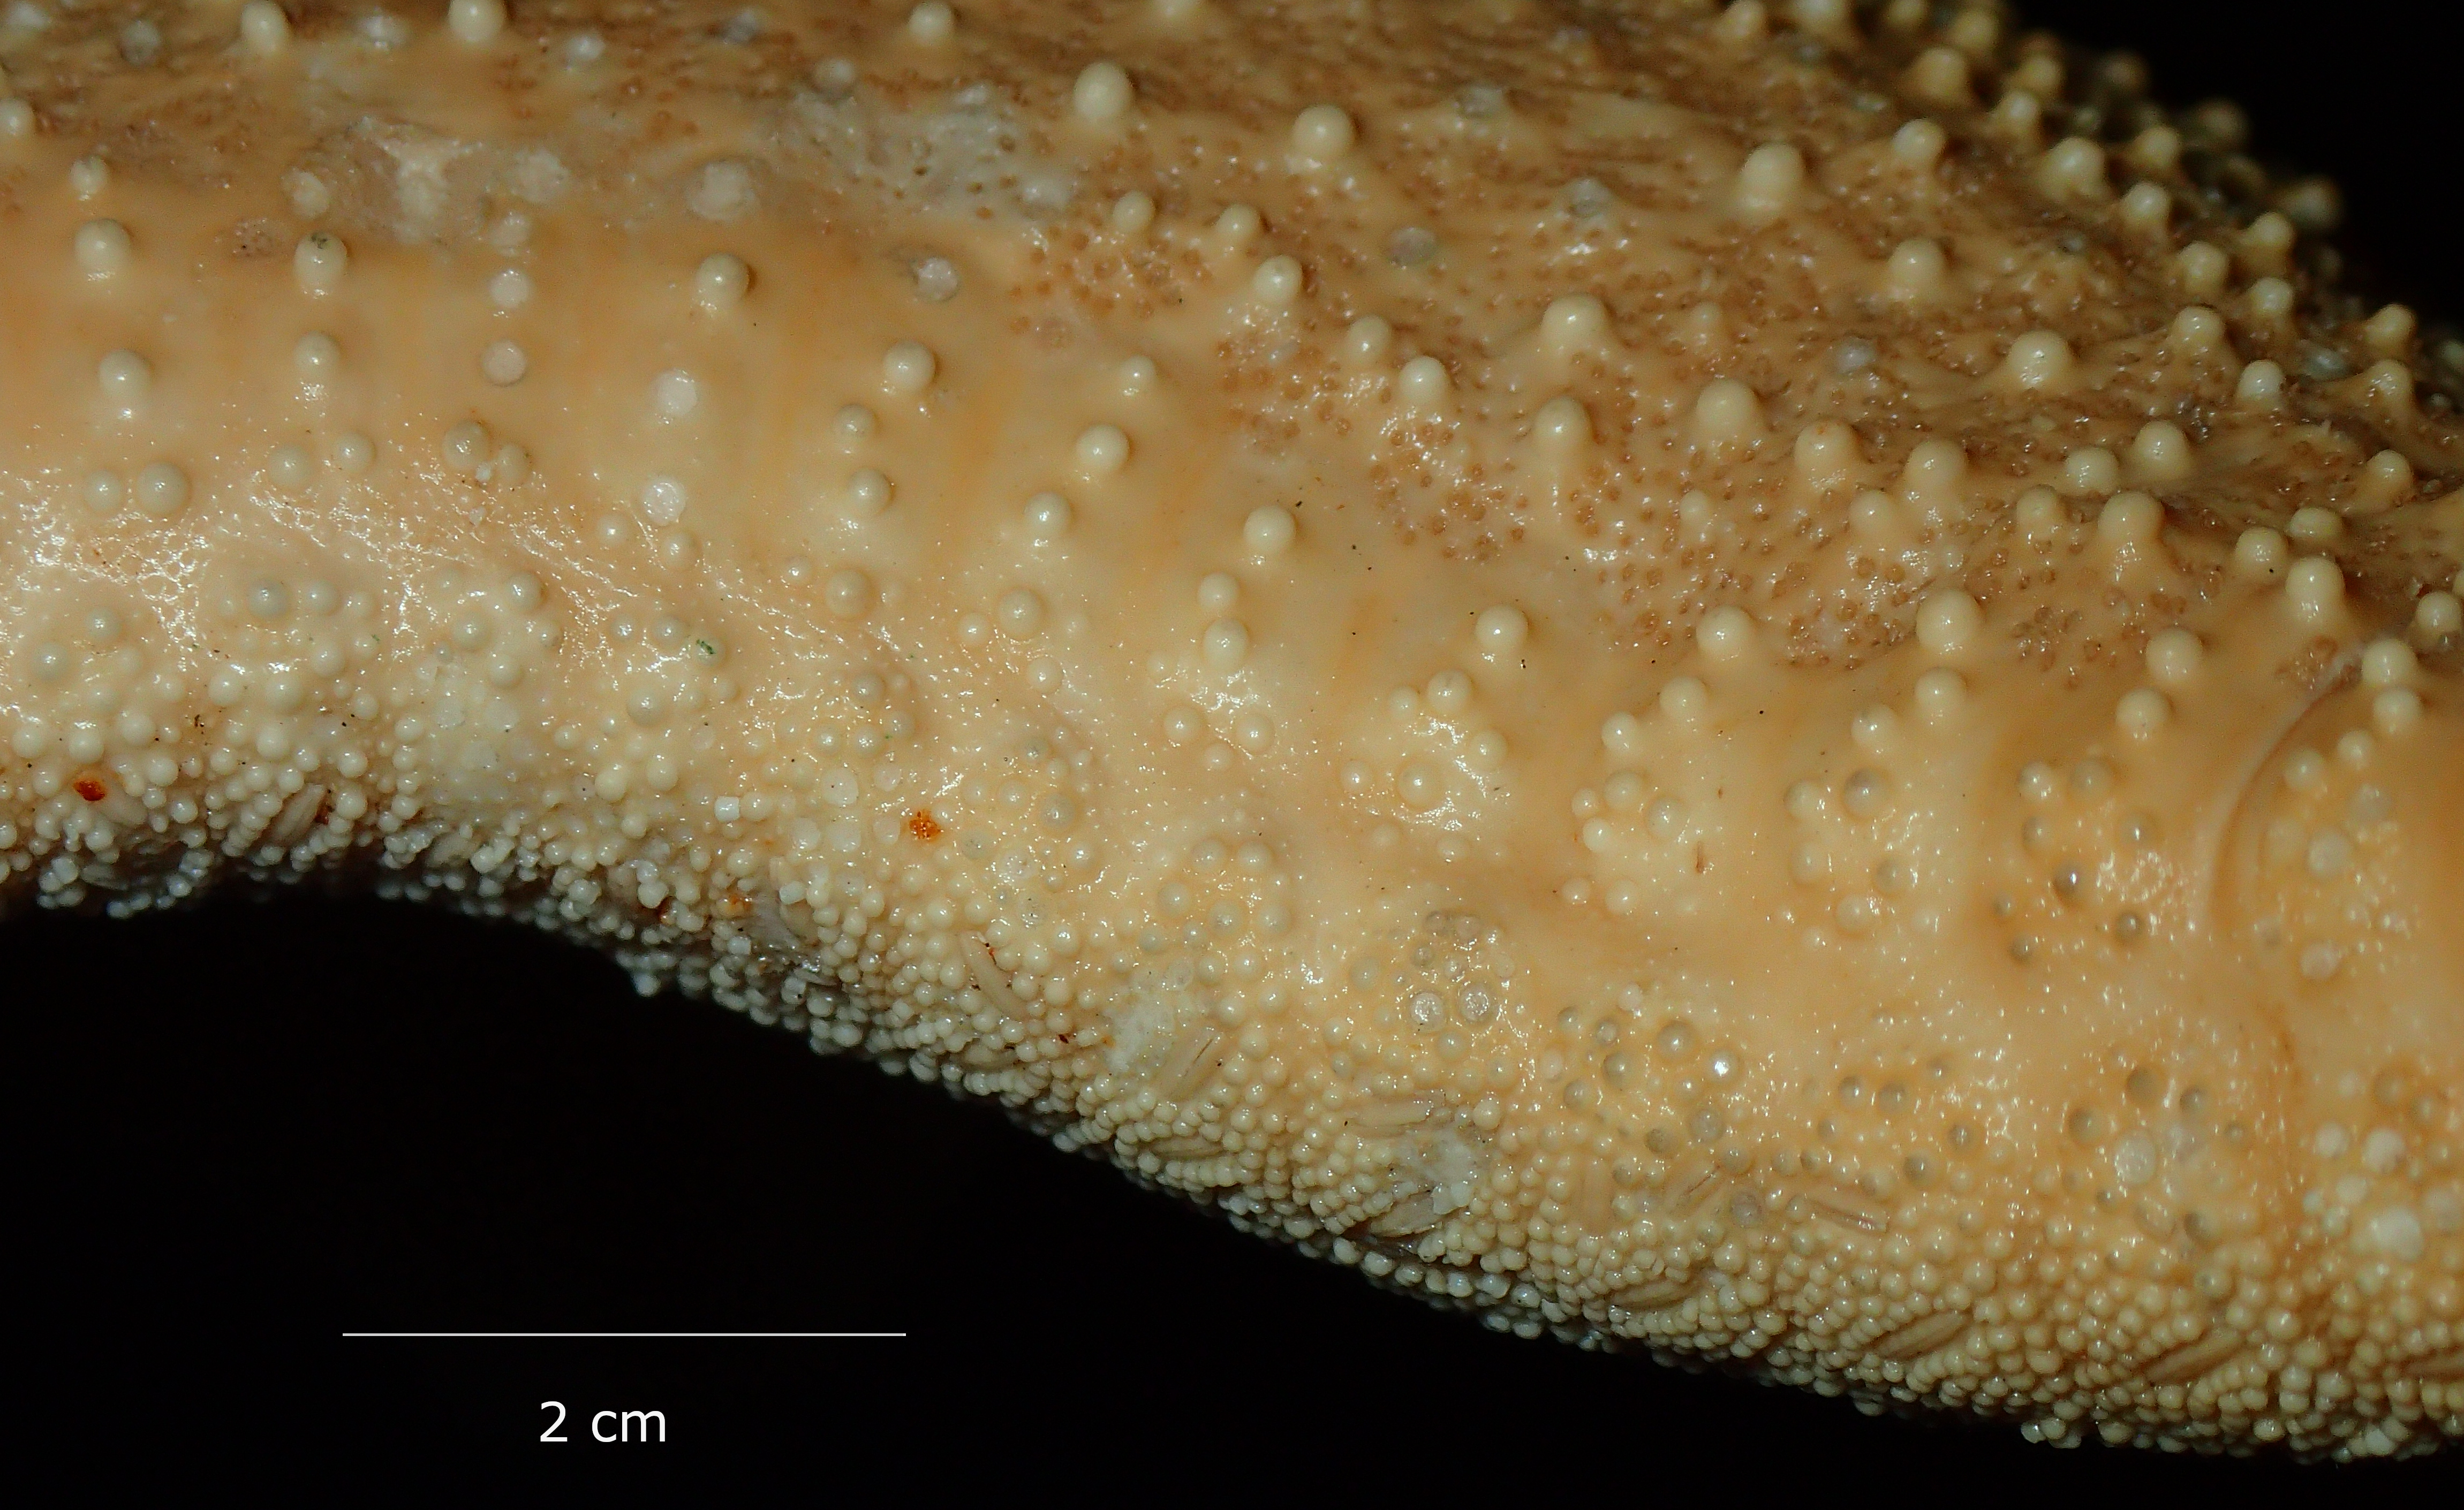 BE-RBINS-INV HOLOTYPE AST.442 Anthenea tuberculosa var. vanstraeleni arm (proximal, lateral view).jpg